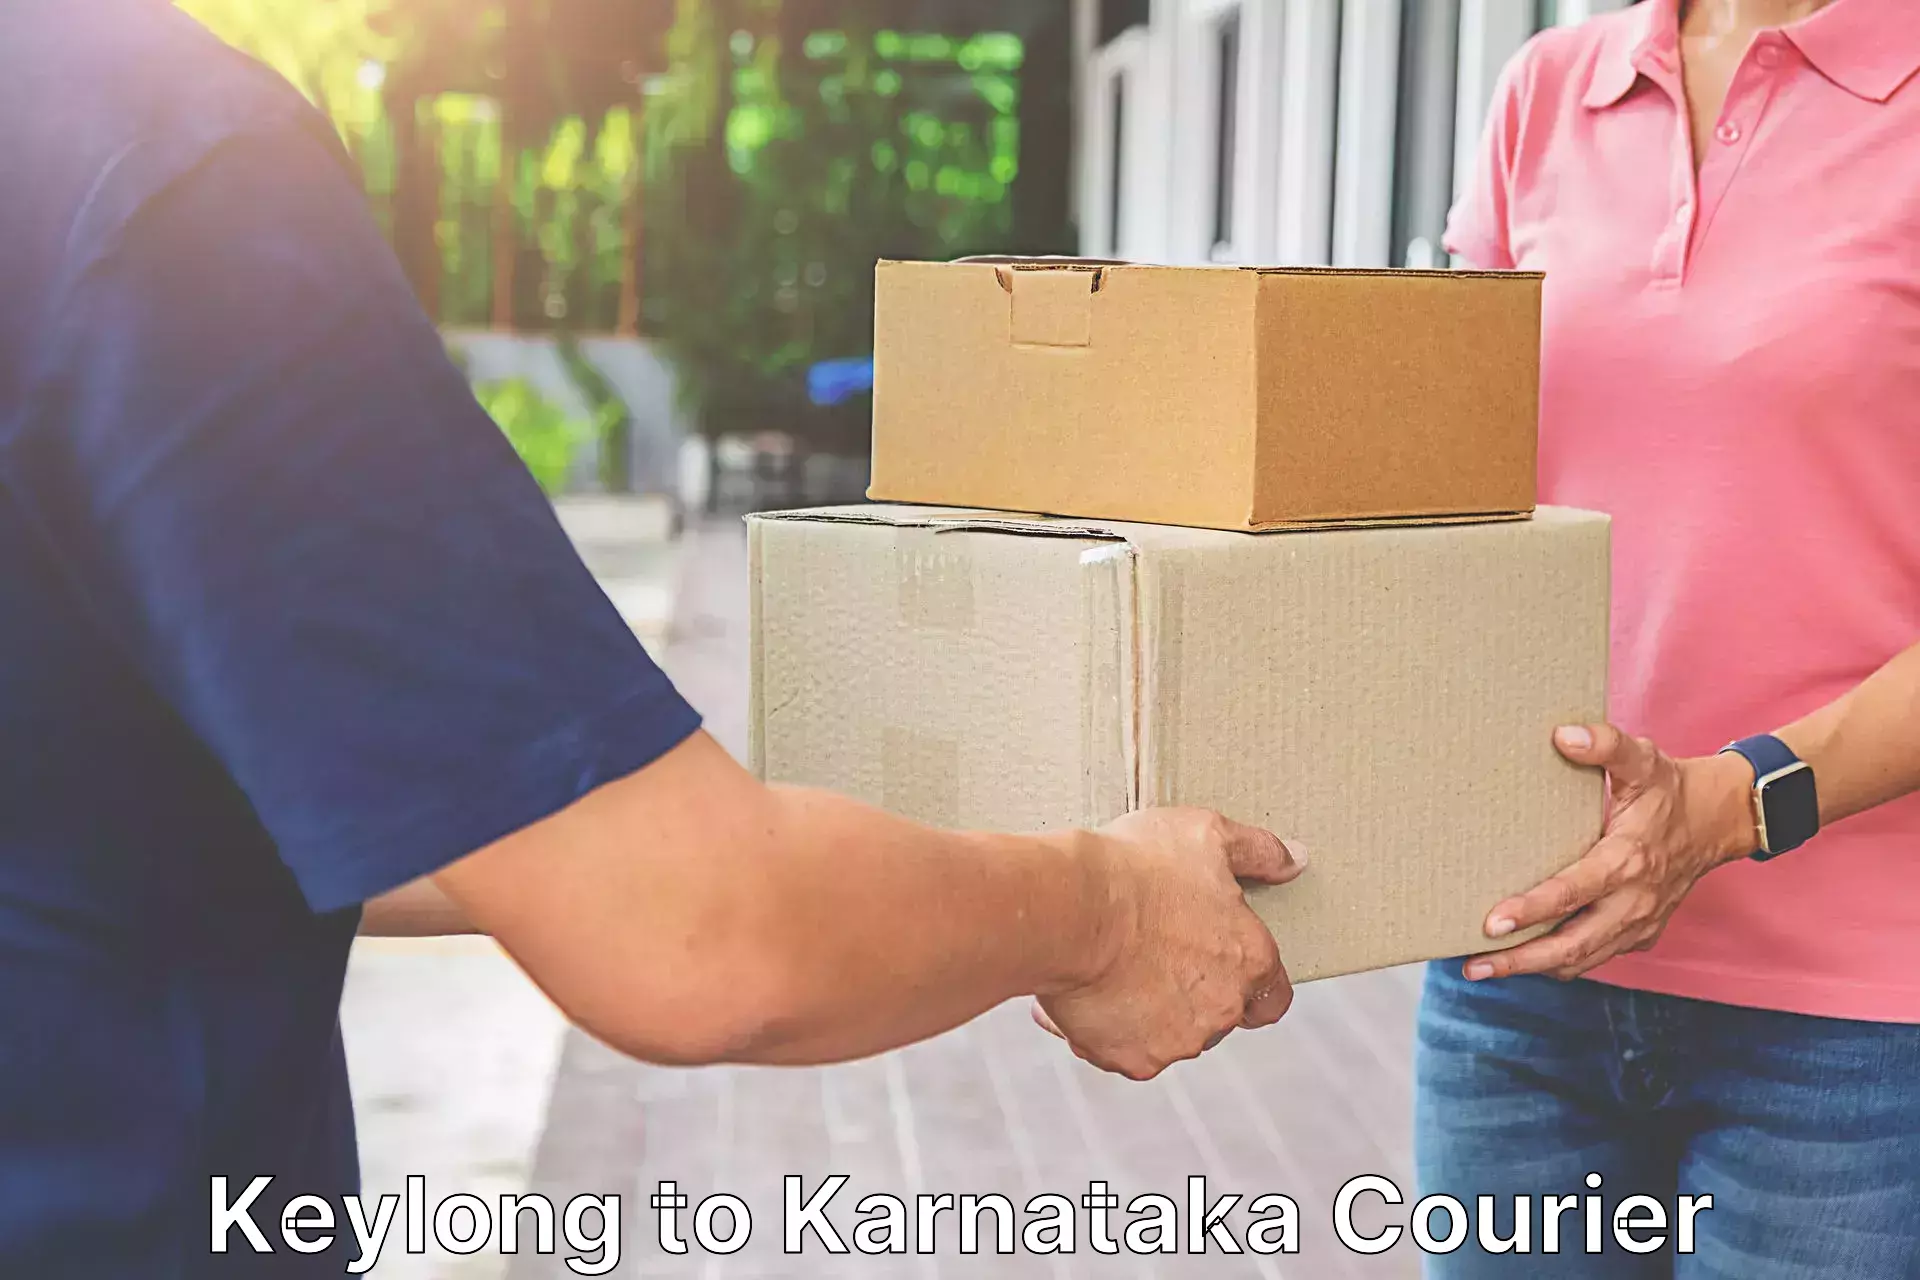 International shipping Keylong to Karnataka